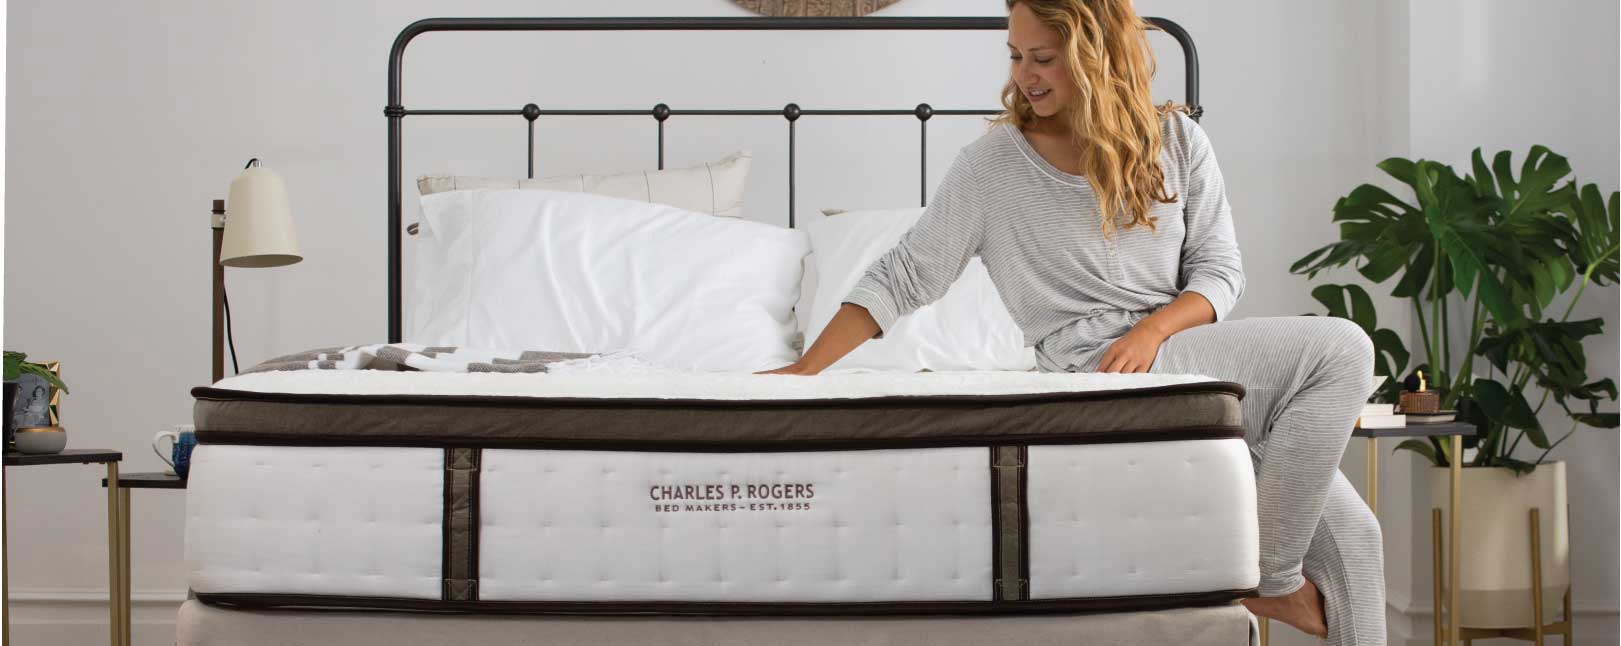 charles p rogers mattress sale